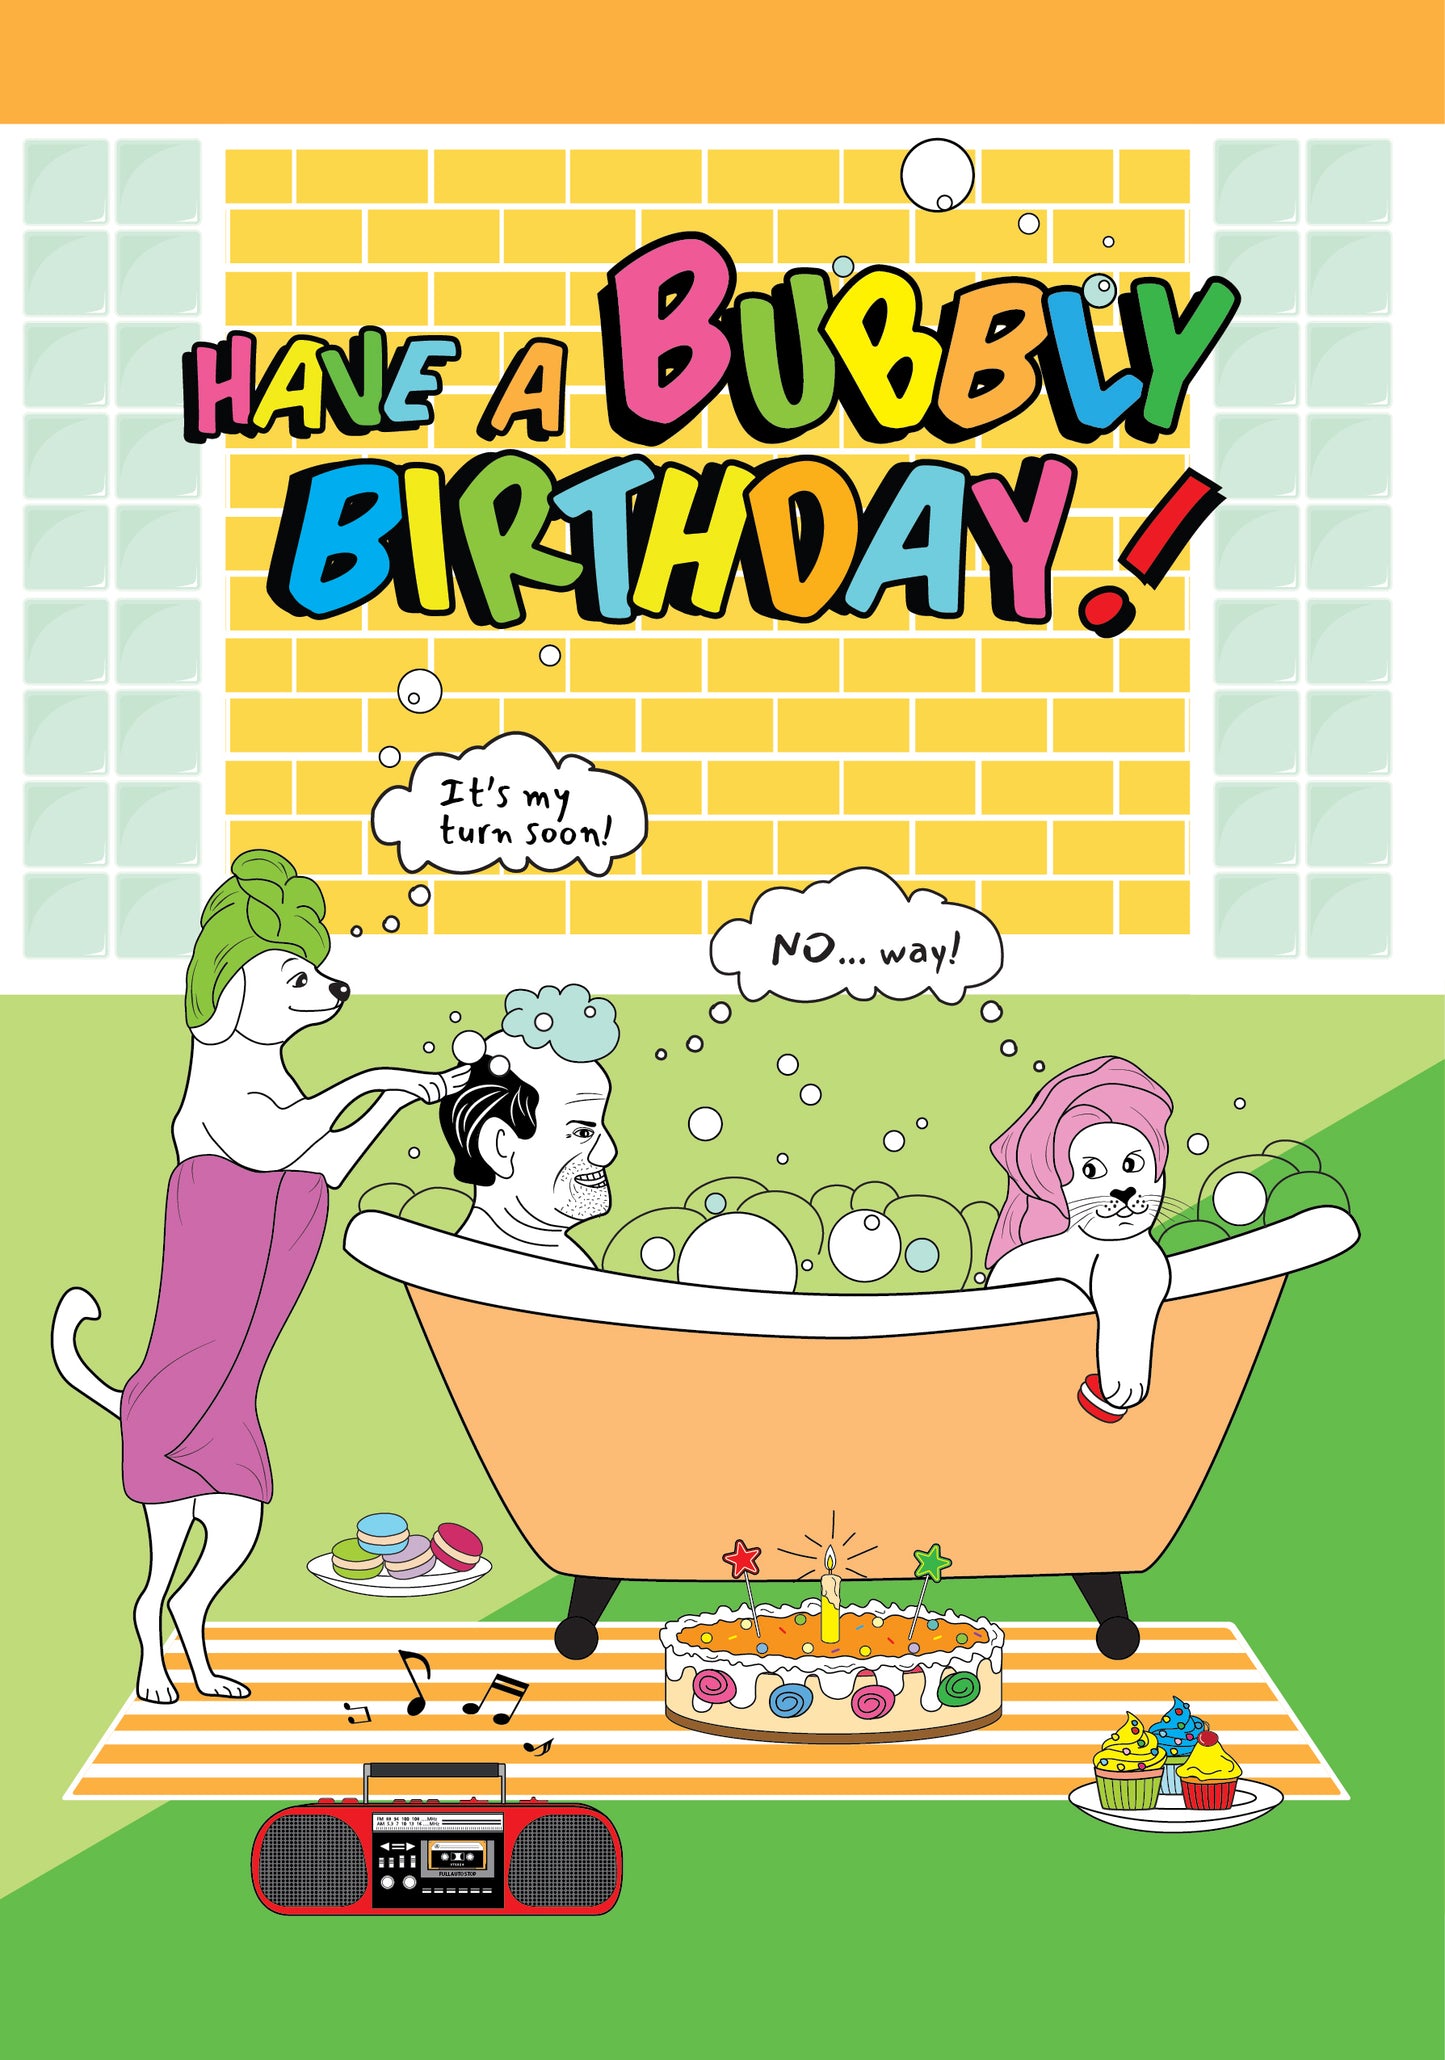 Have a Bubbly Birthday!